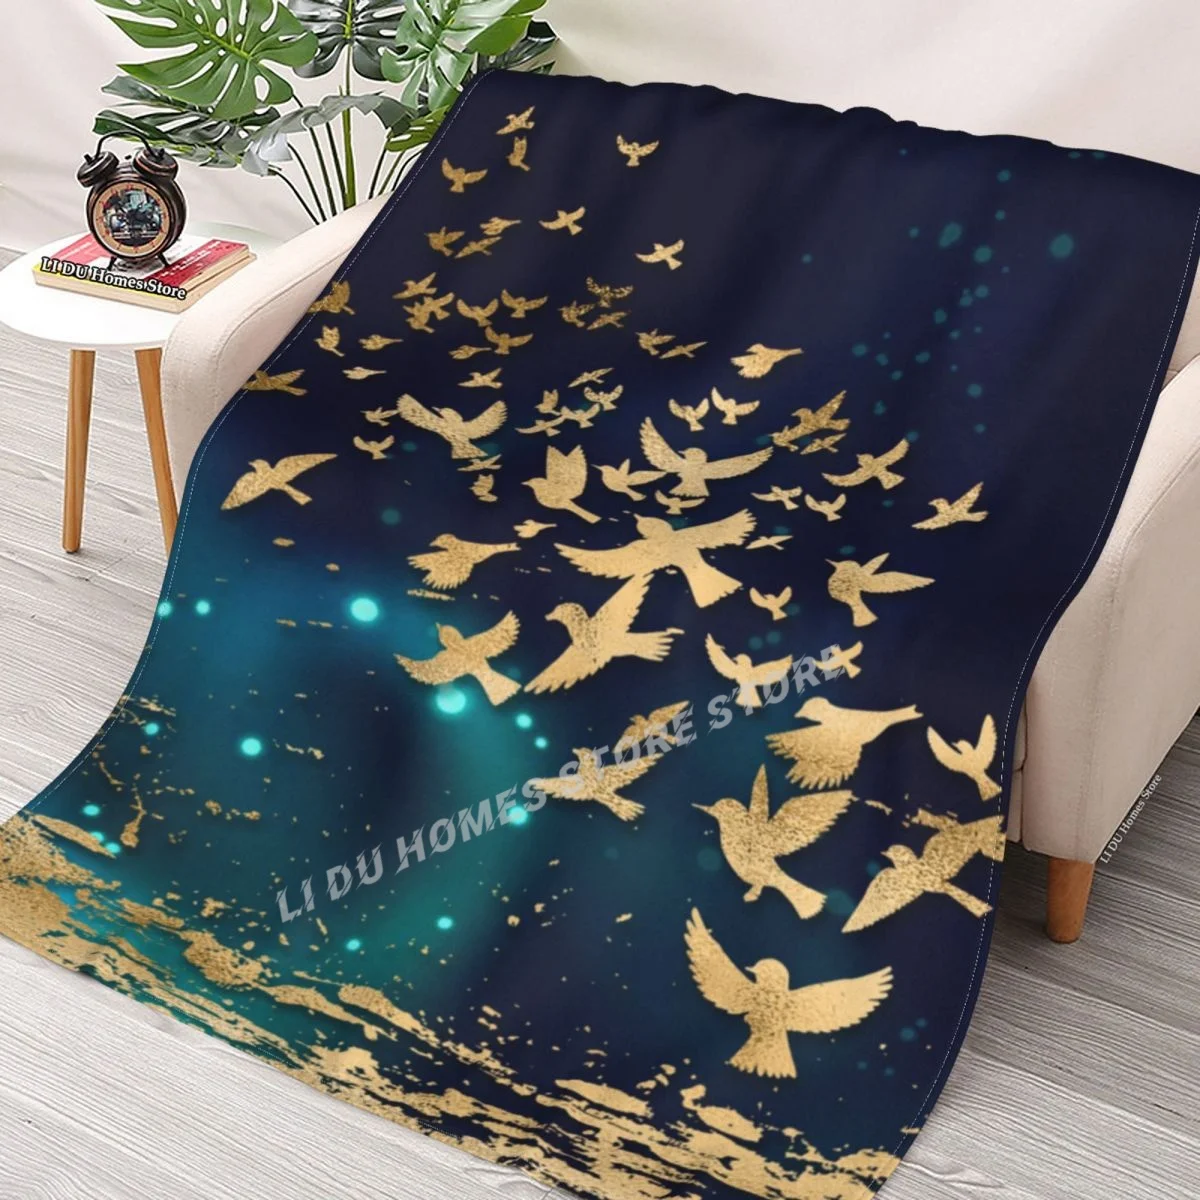 

3d Flock Of Birds In Flight Throw Blanket flannel Collage Blanket Bedding soft Cover Bedspreads Blankets